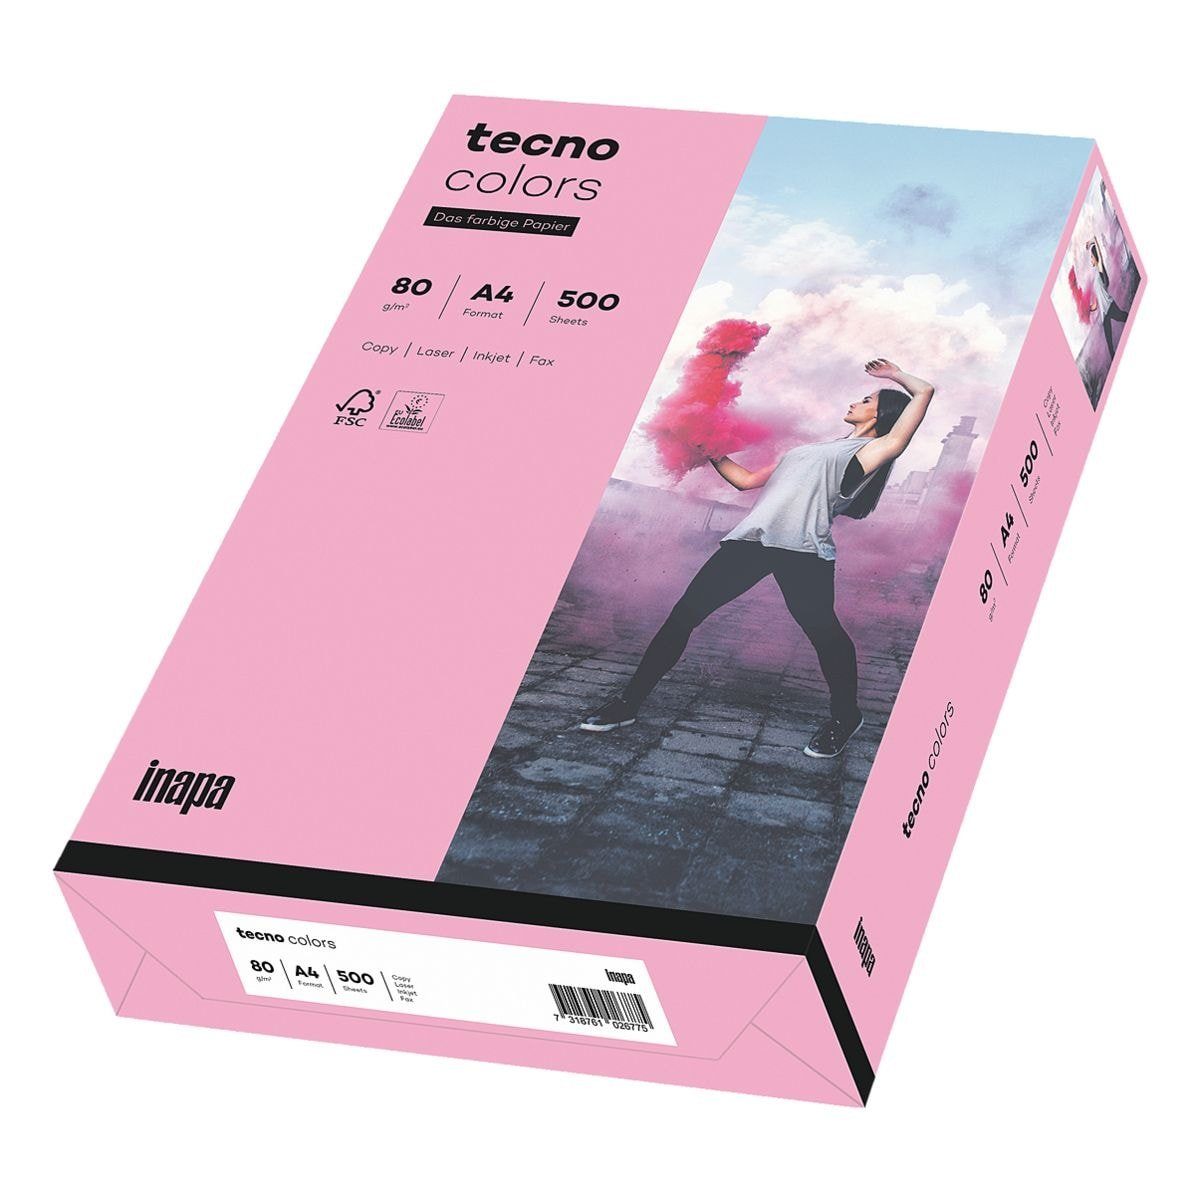 Inapa tecno Drucker- und Kopierpapier Rainbow / tecno Colors, Pastellfarben, Format DIN A4, 80 g/m², 500 Blatt rosa